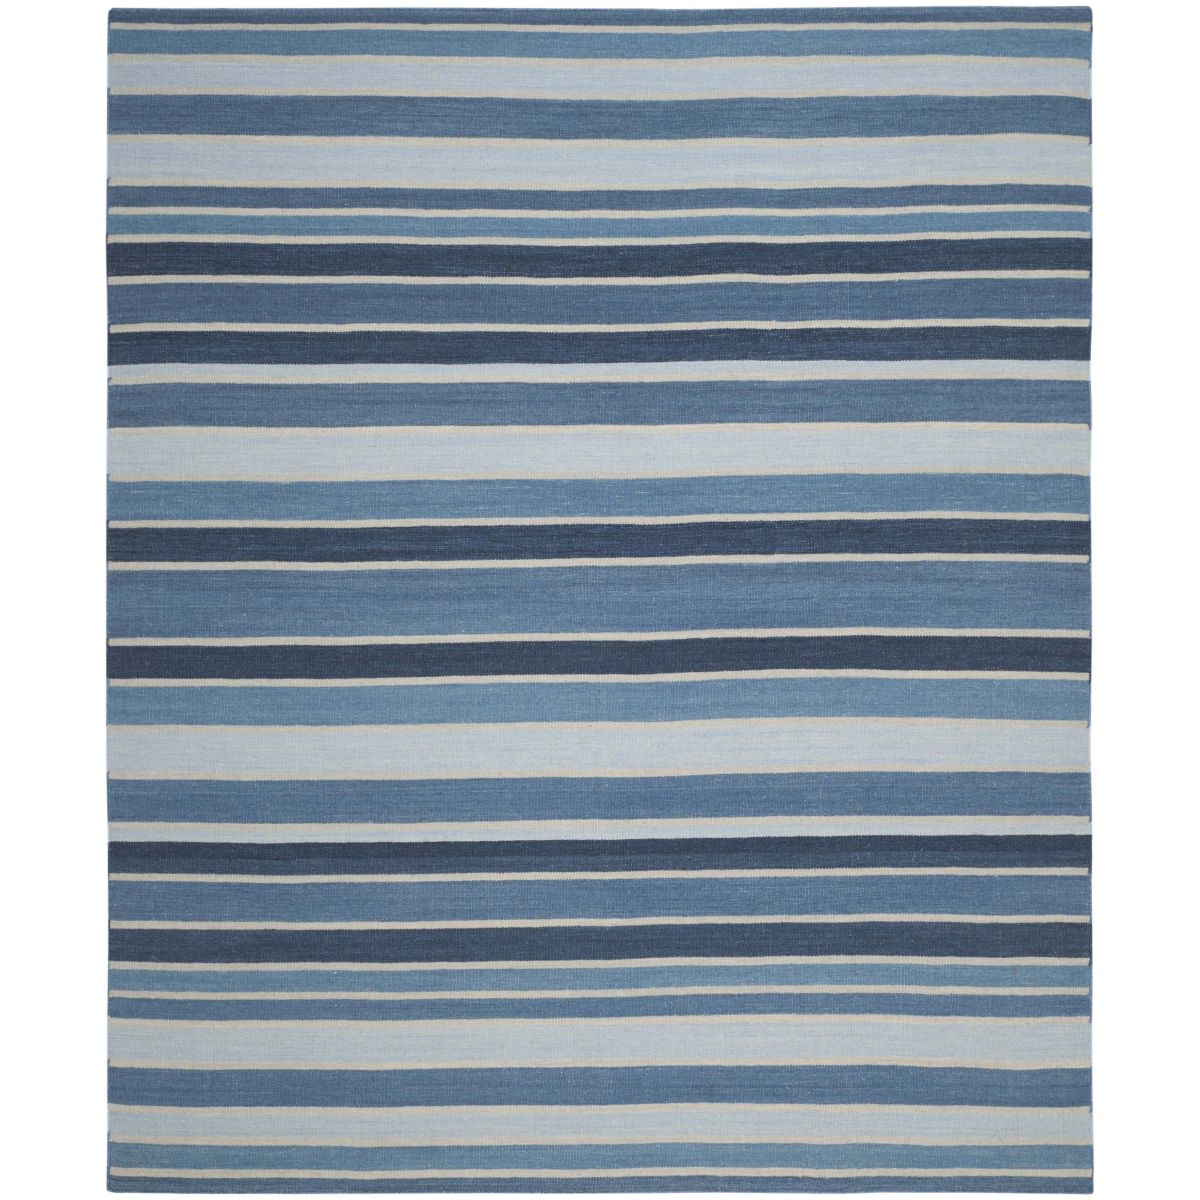 Ralph Lauren Barragan Stripe Rug, RLR2721 - Horizon